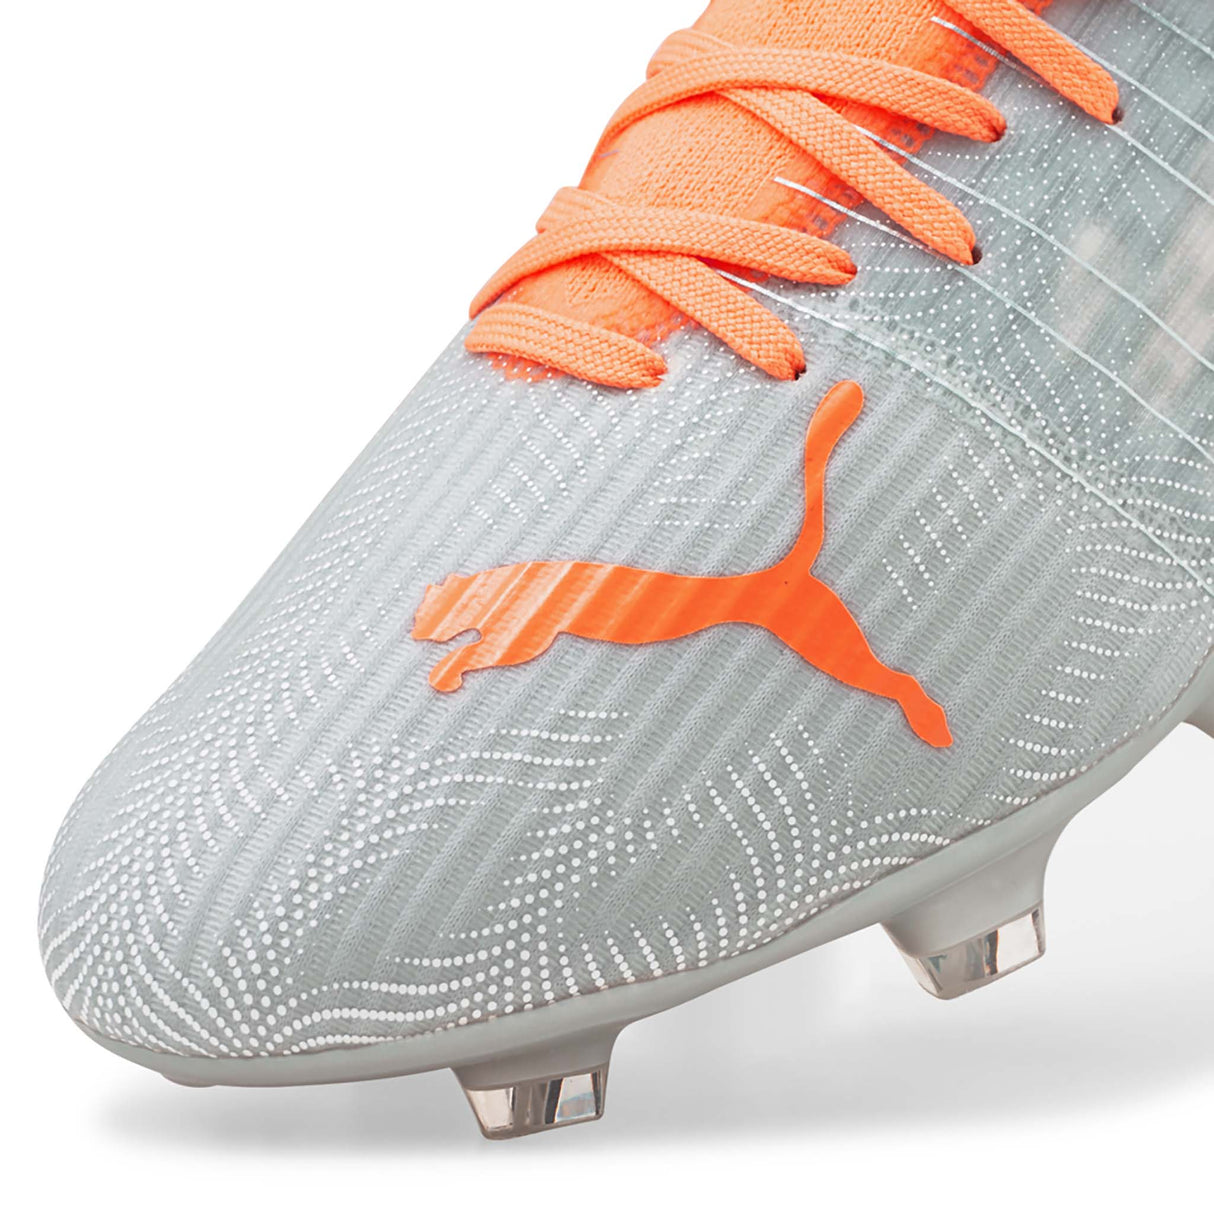 Puma Ultra 3.4 FG/AG chaussures de soccer adulte diamond silver orange pointe